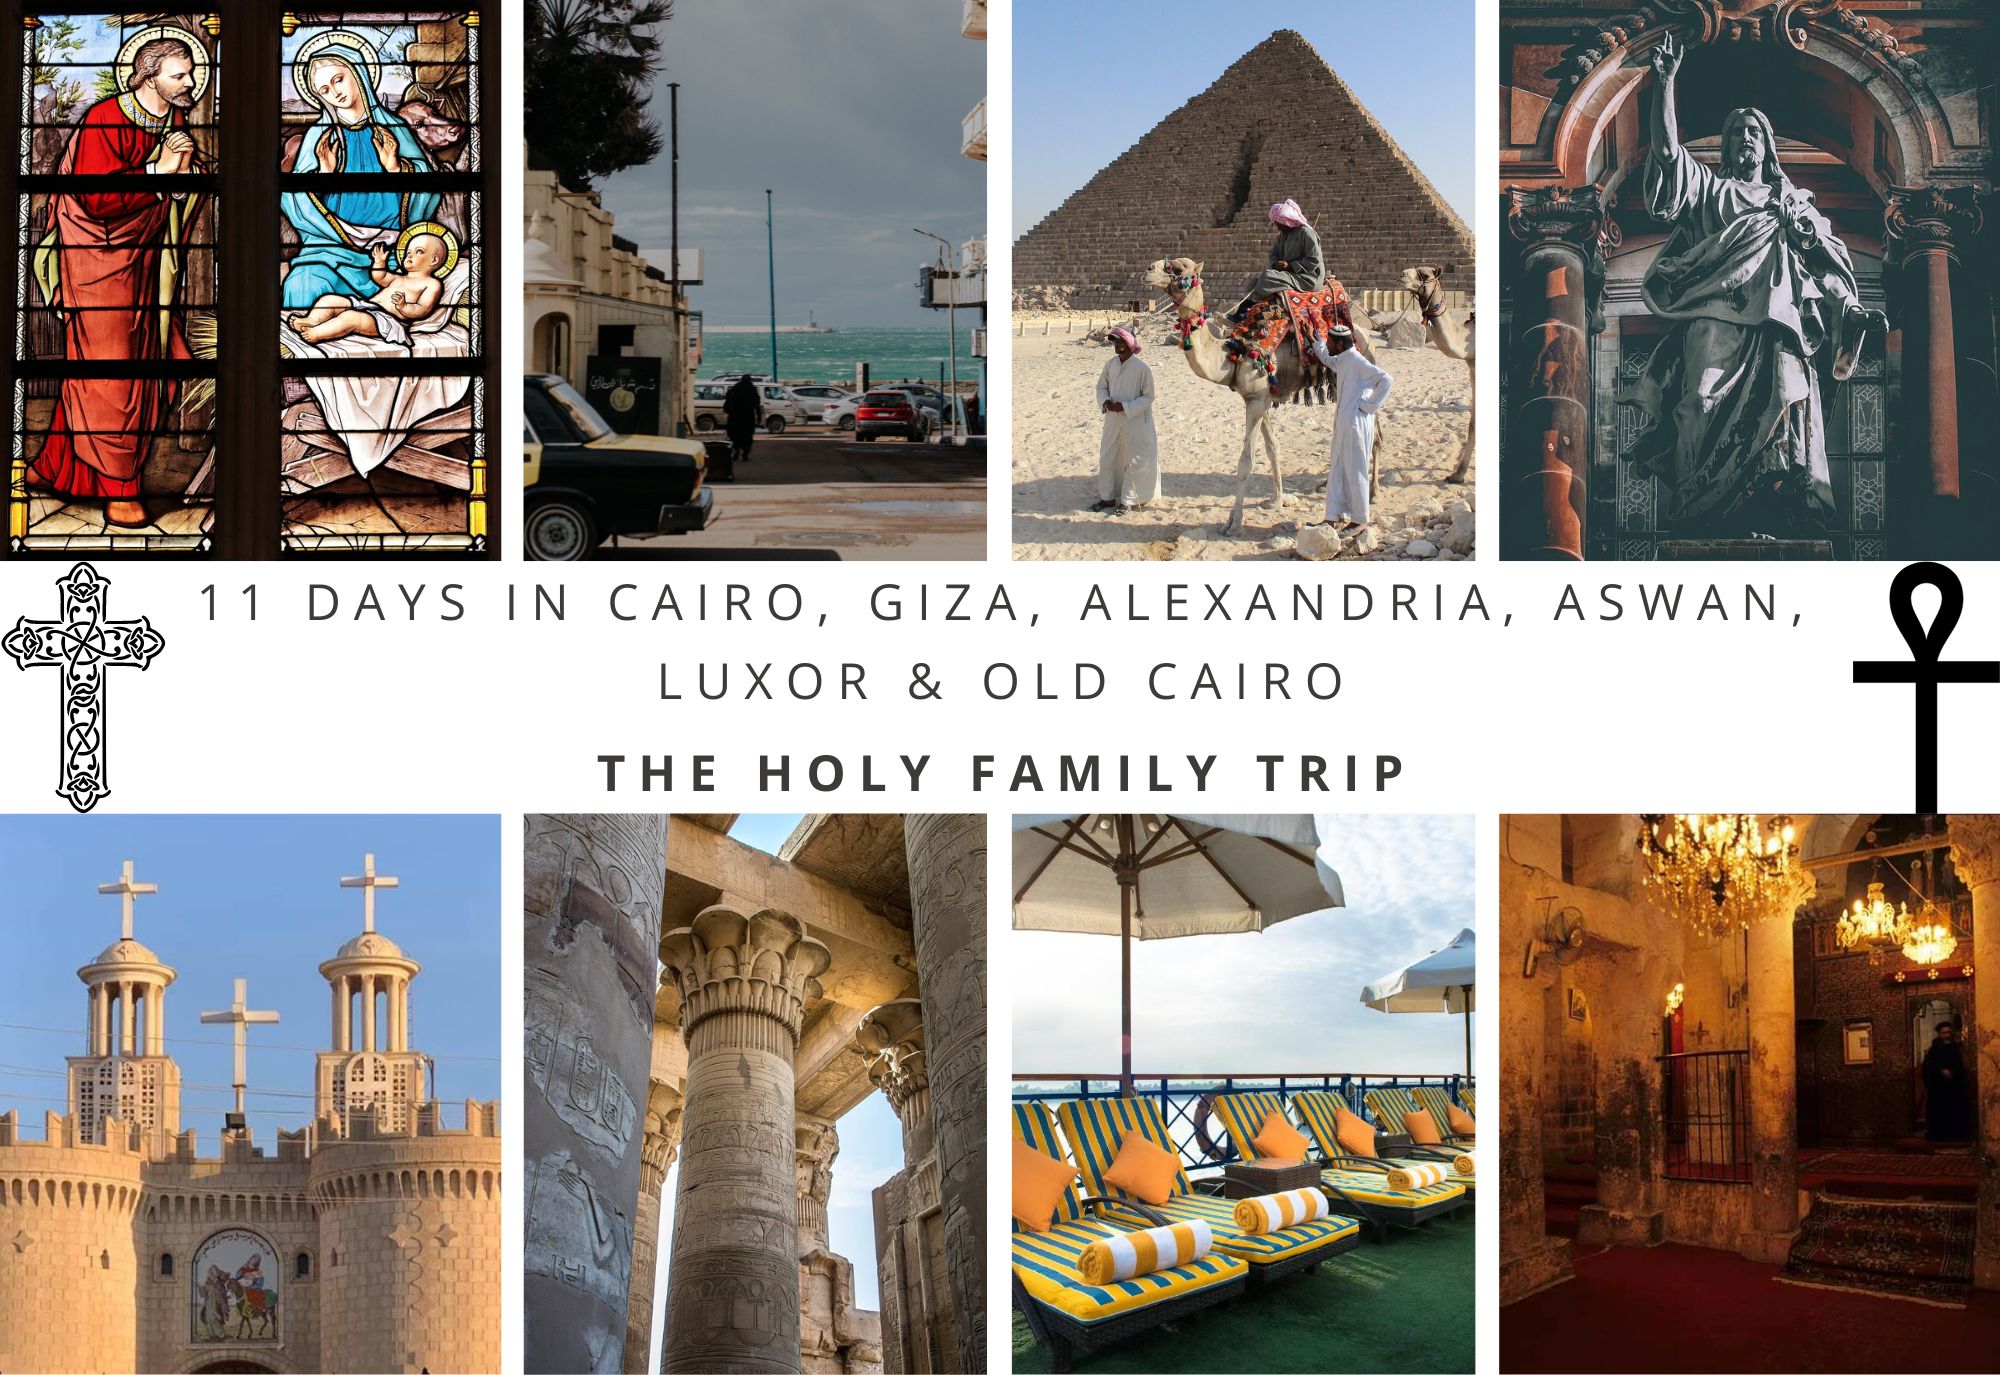 11 Days in Cairo, Giza, Alexandria, Aswan, Luxor & Old Cairo (The Holy Family Trip)